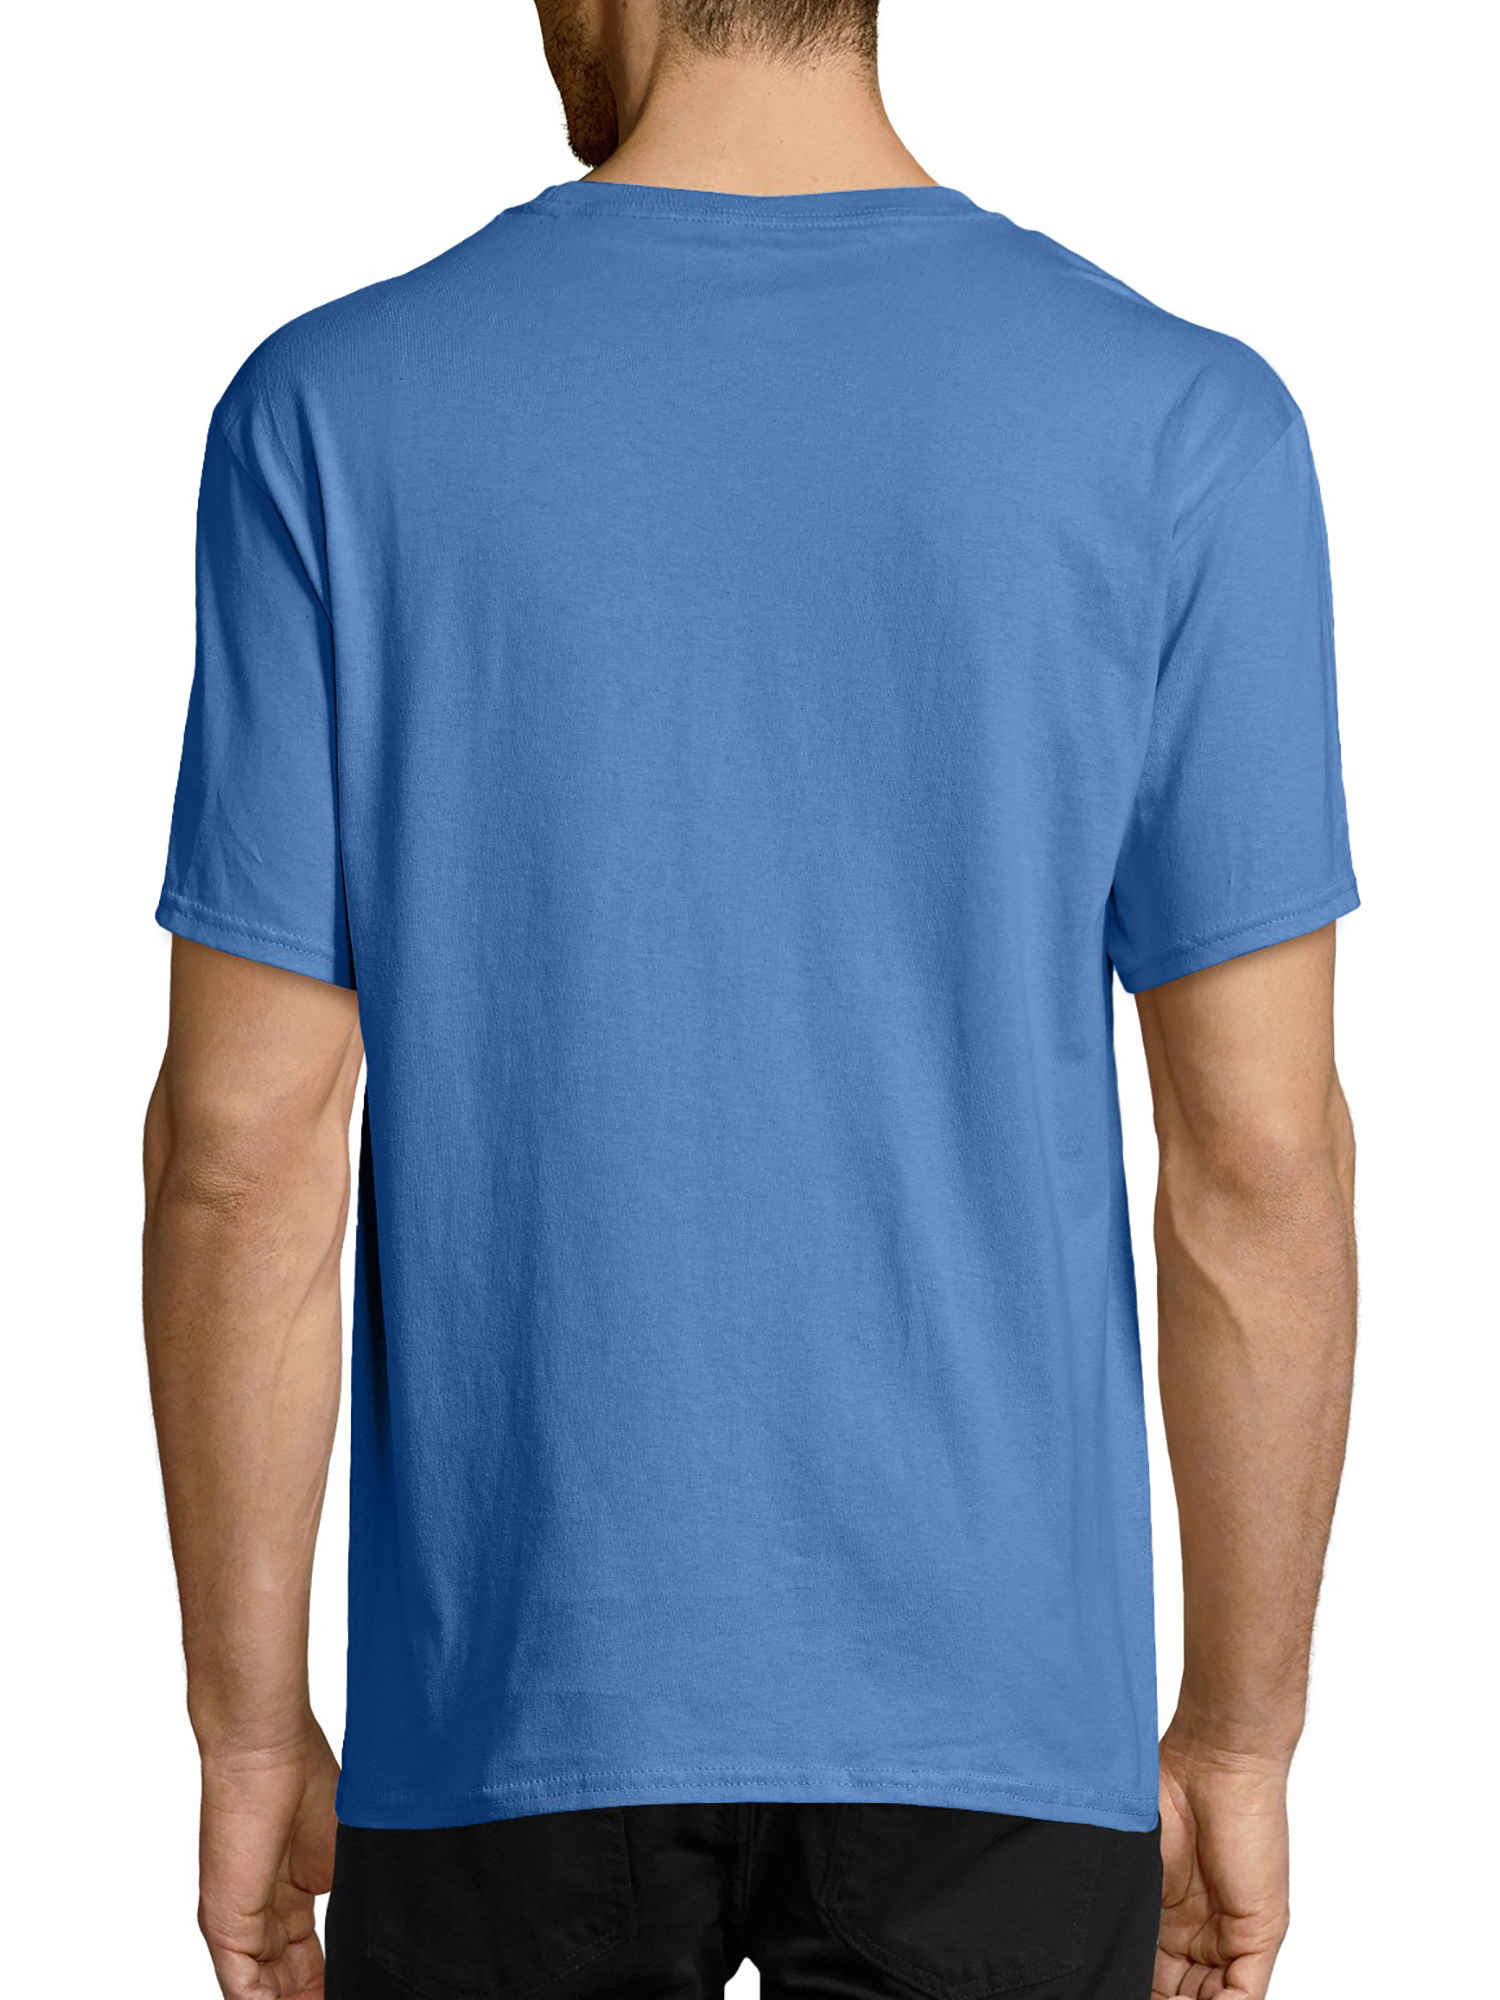 Hanes Authentic Men's T-Shirt (Big & Tall Sizes Available) Carolina ...